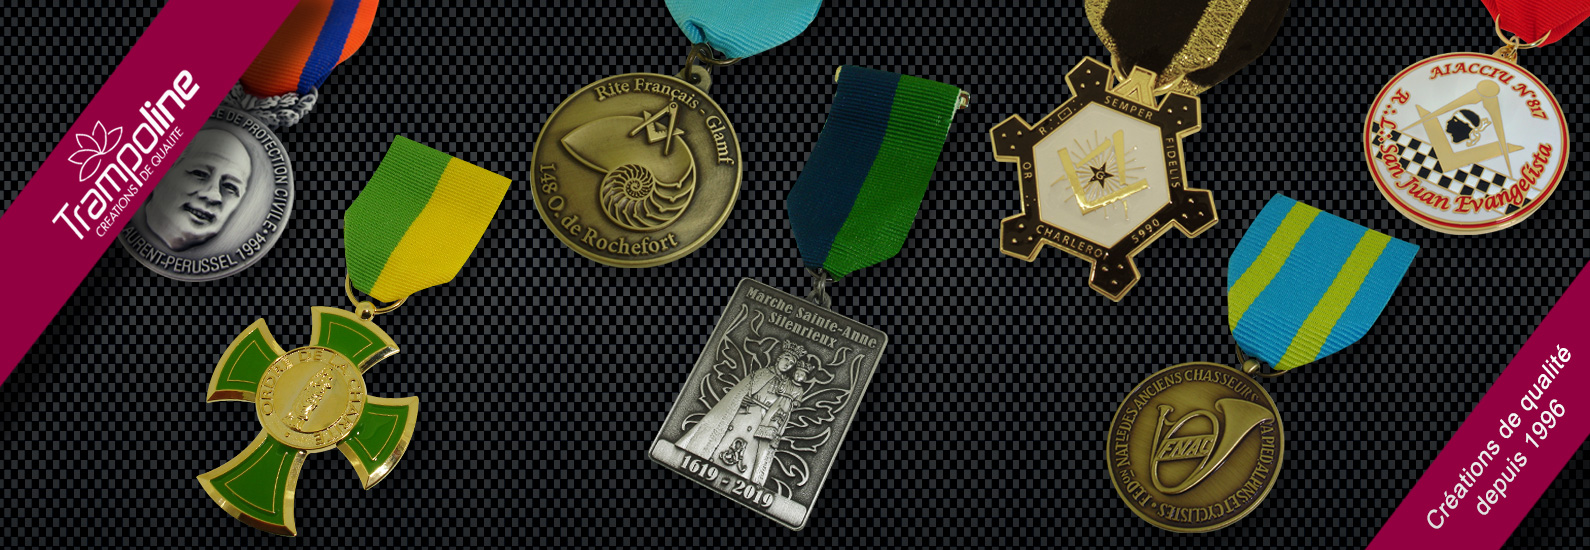 4 realisation medaille ruban epingle loge costume ceremonie pochette